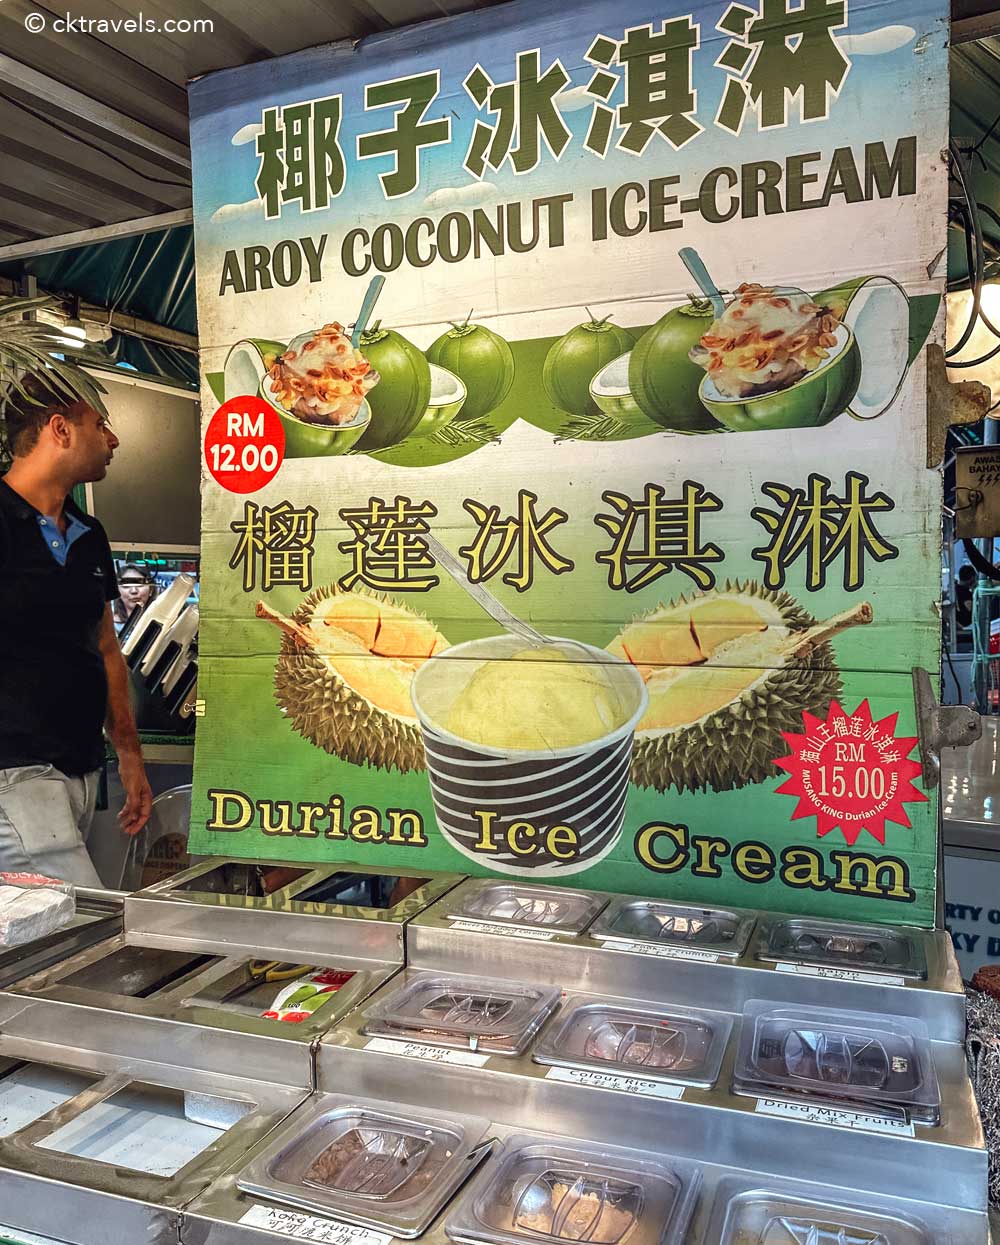 coconut durian ice cream Jalan Alor food street night market - Kuala Lumpur